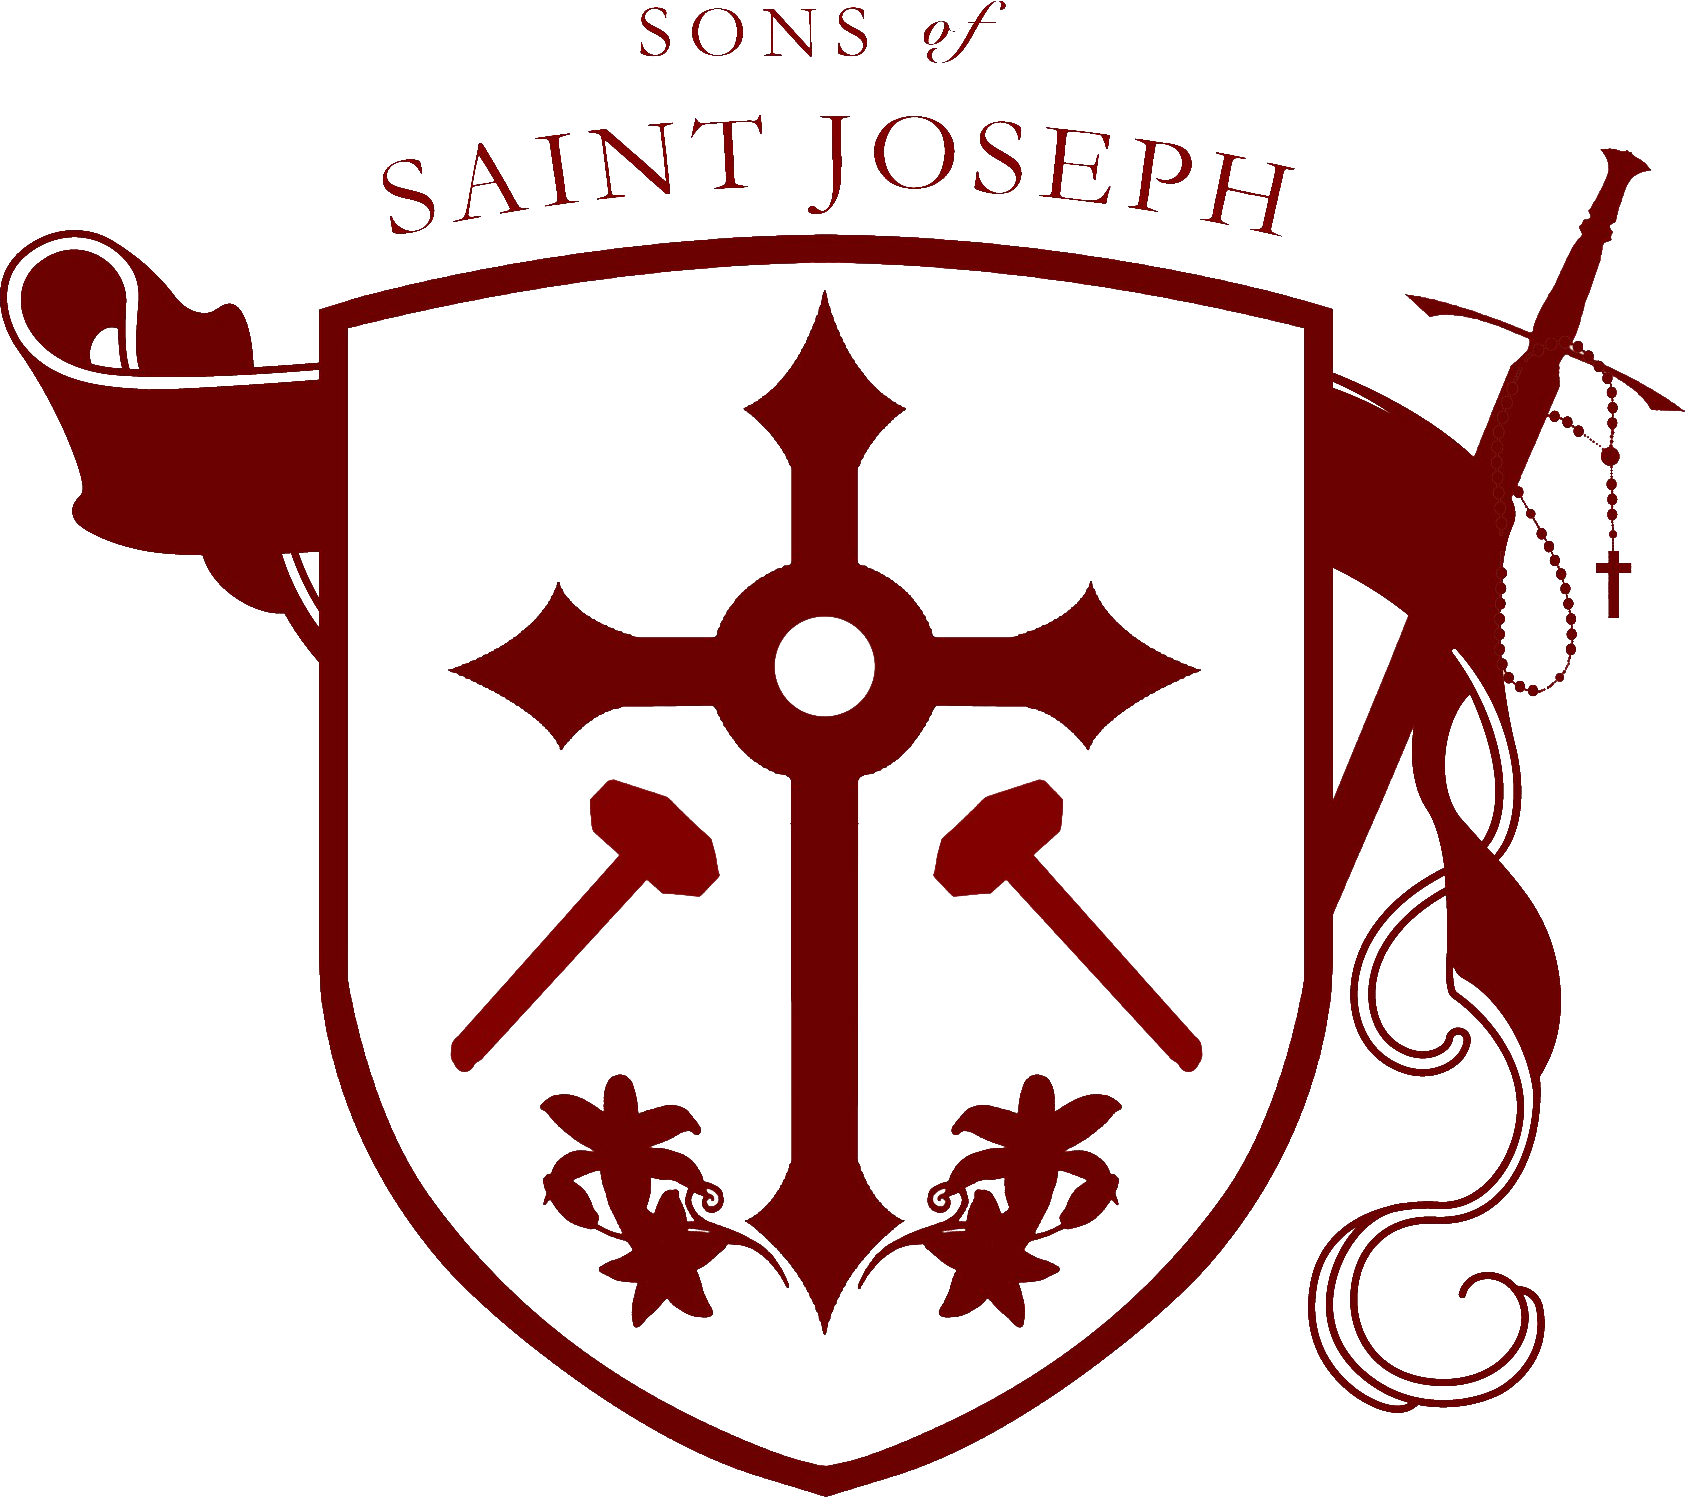 Sons of Saint Joseph